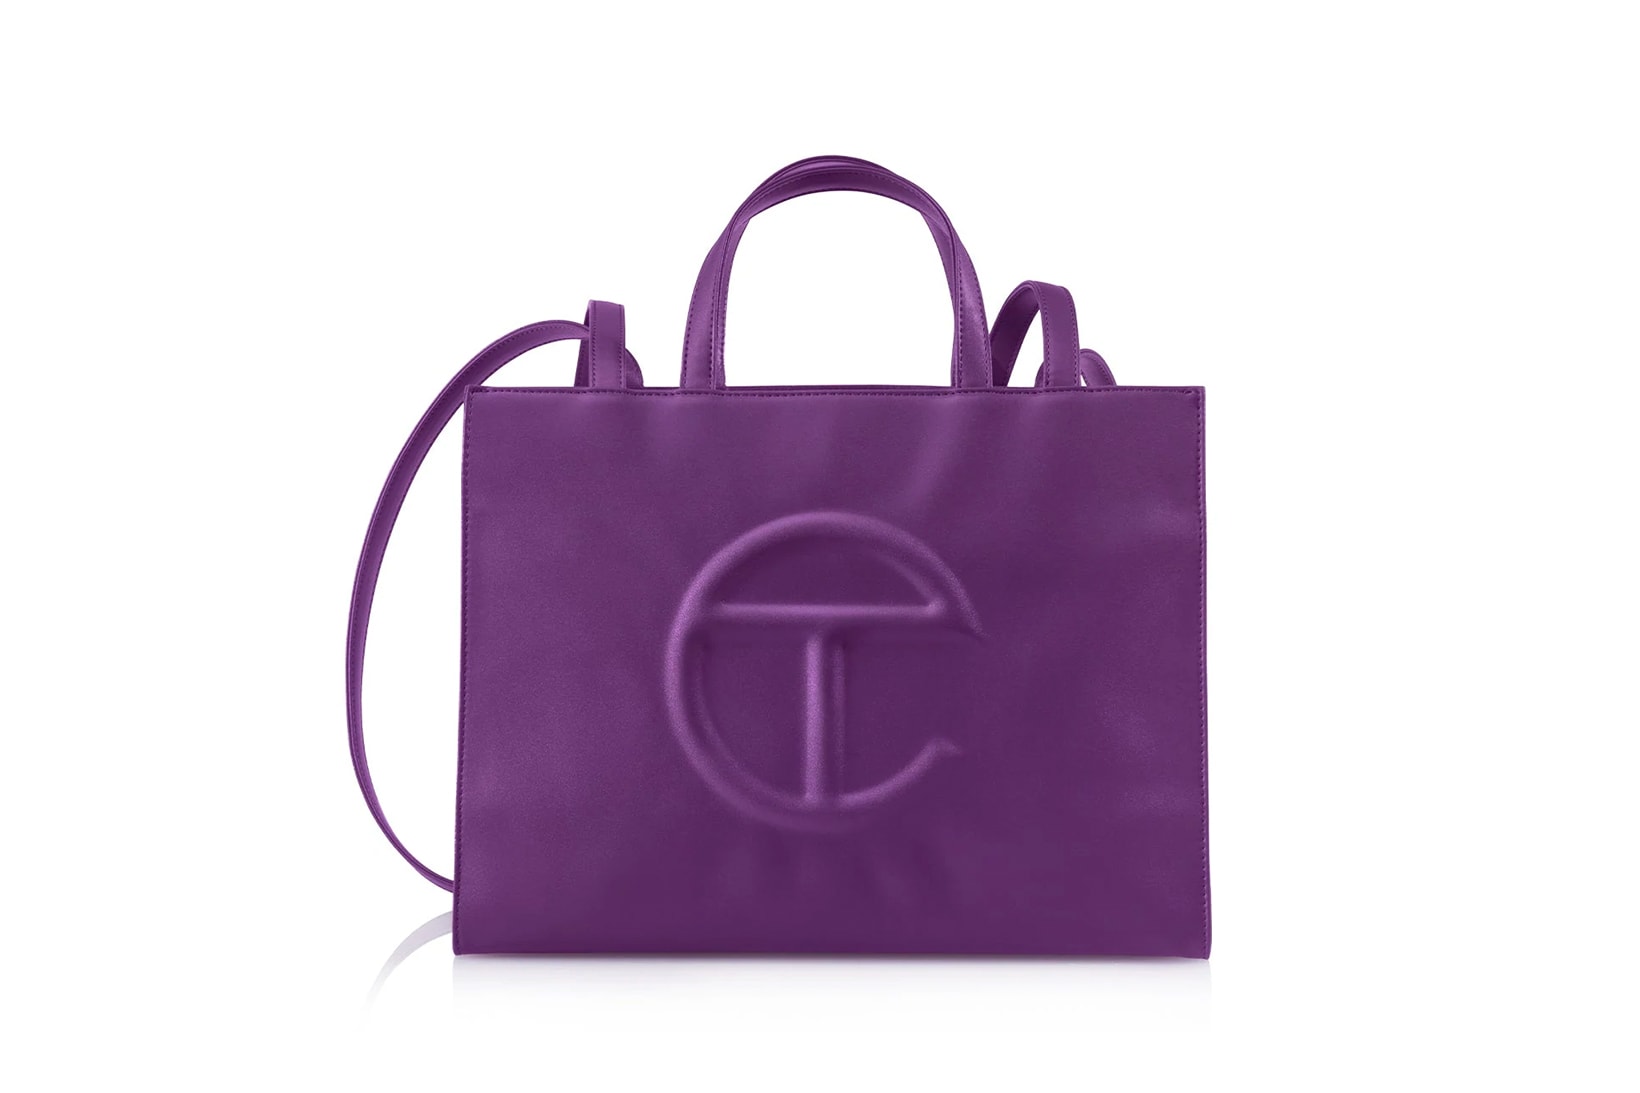 Telfar Bags | Telfar x Melissa Clear Pink Small Jelly Shopper | Color: Pink | Size: Os | Sohoskirt's Closet